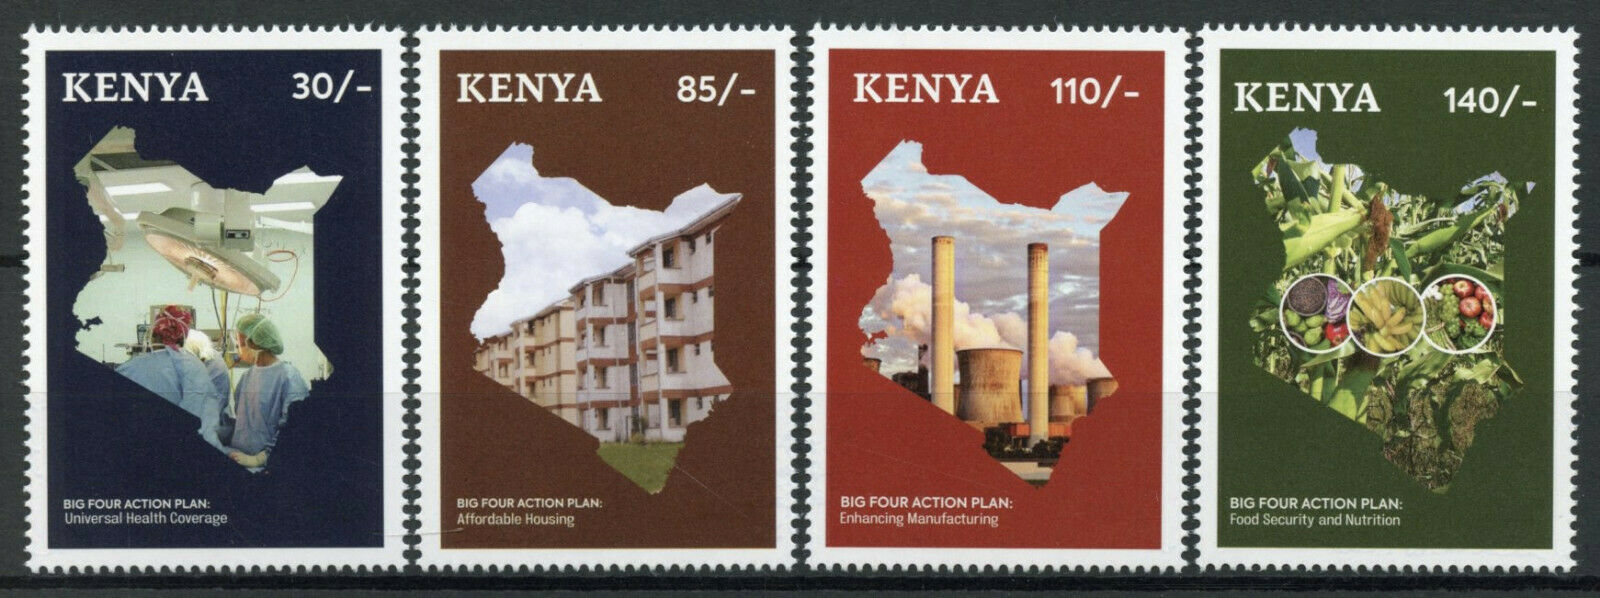 Kenya Stamps 2019 MNH Big Four Action Plan Architecture Education Plants 4v Set